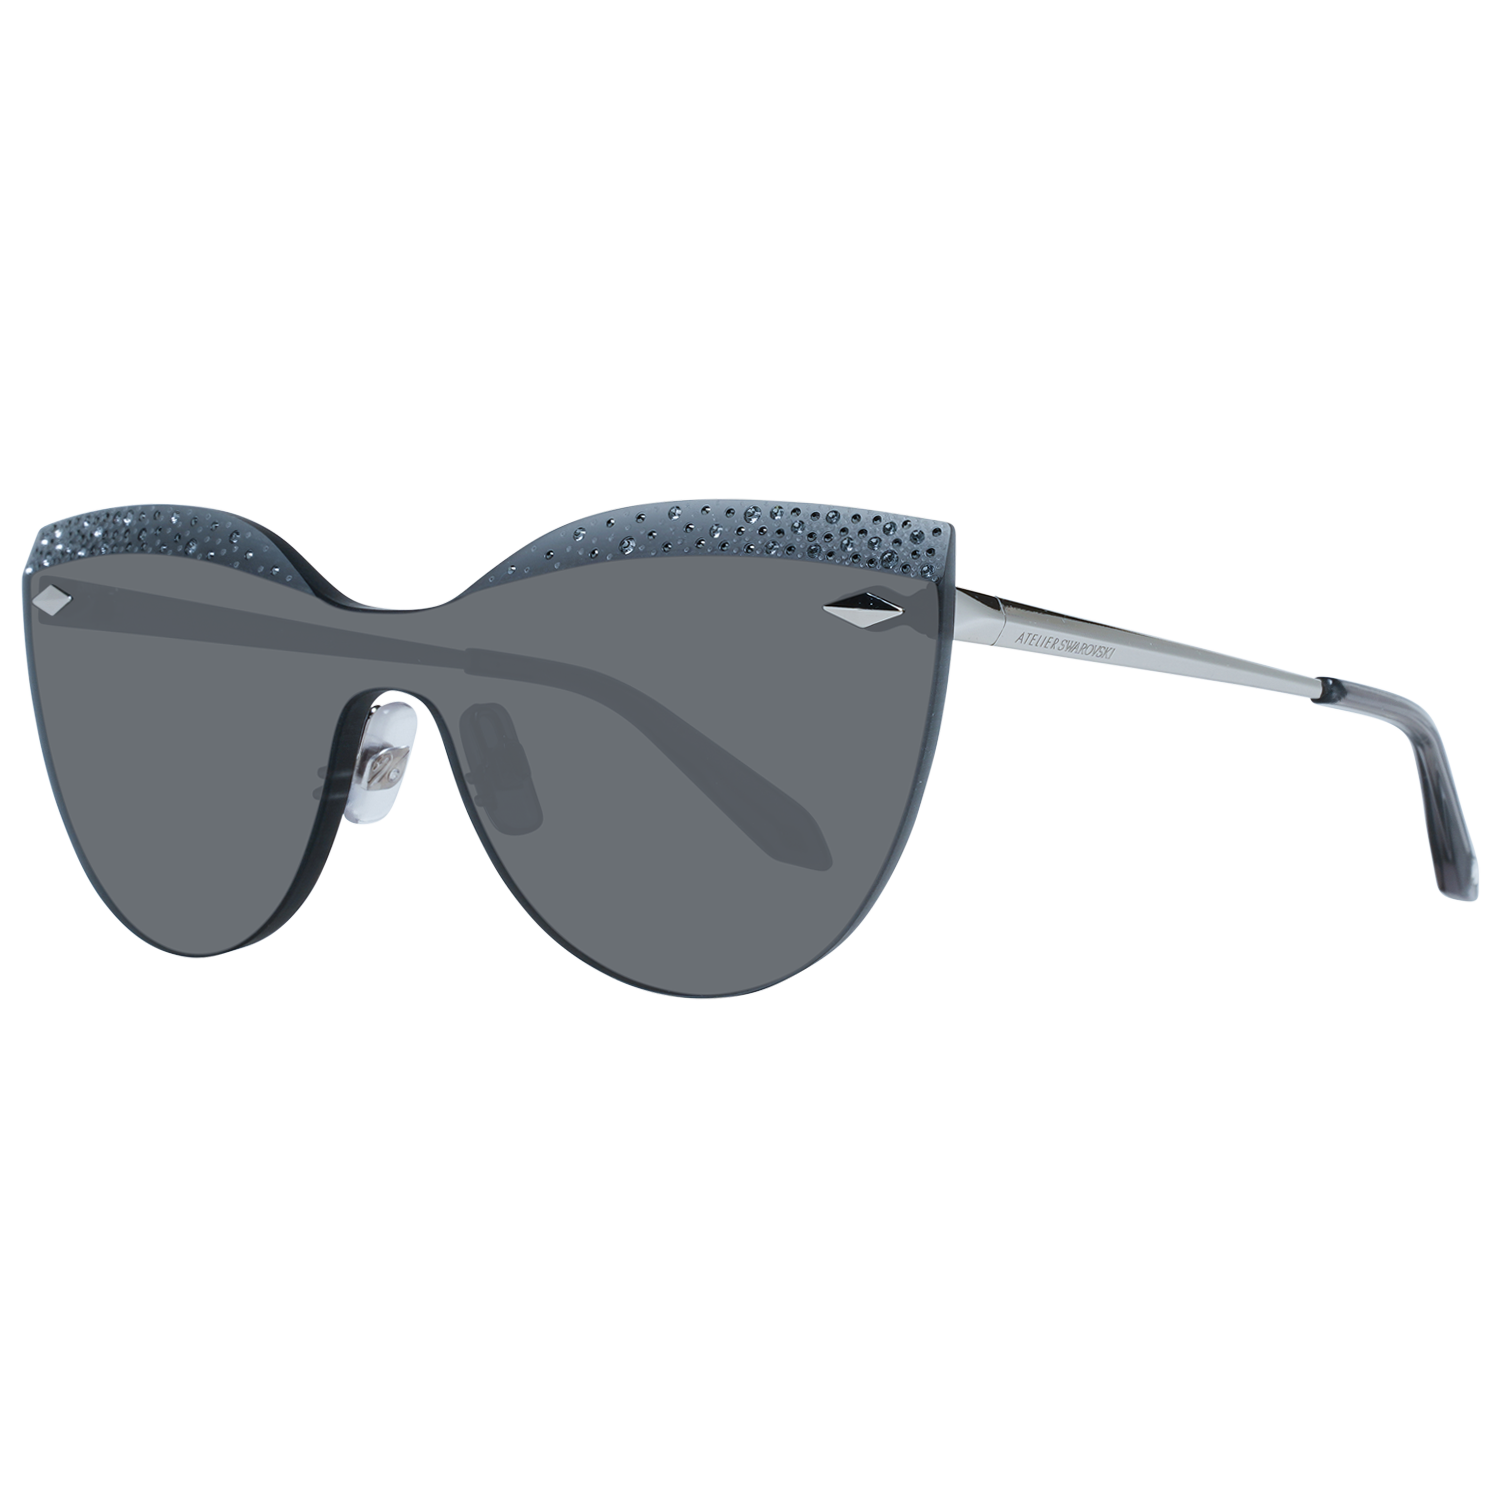 Atelier Swarovski Sunglasses Atelier Swarovski Sunglasses SK0160-P 16A Eyeglasses Eyewear UK USA Australia 